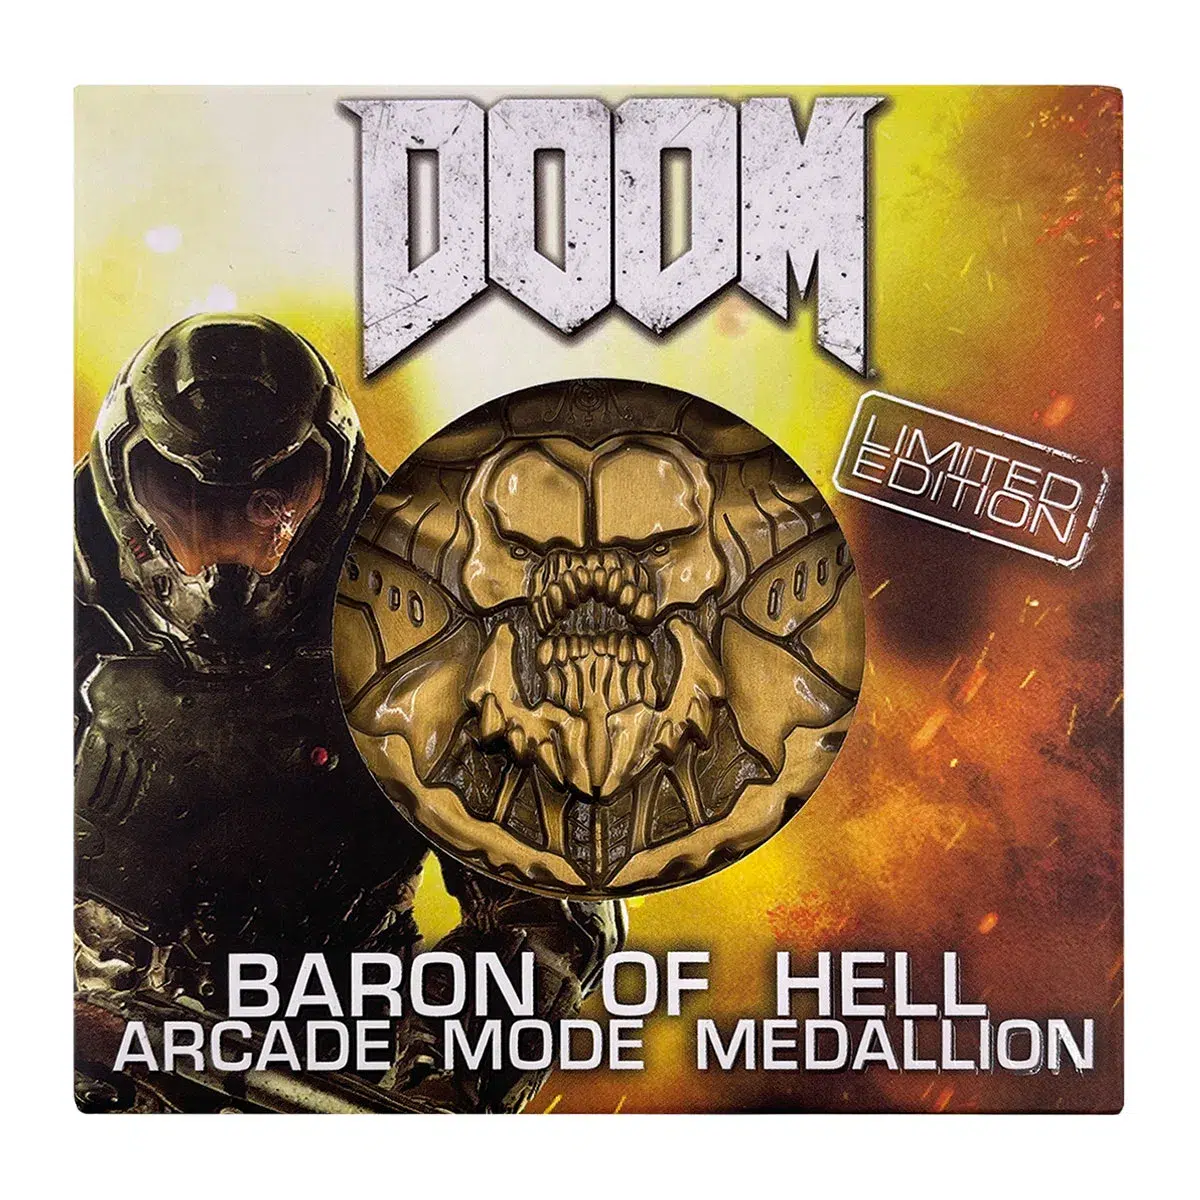 DOOM Medallion "Baron of Hell" Image 2